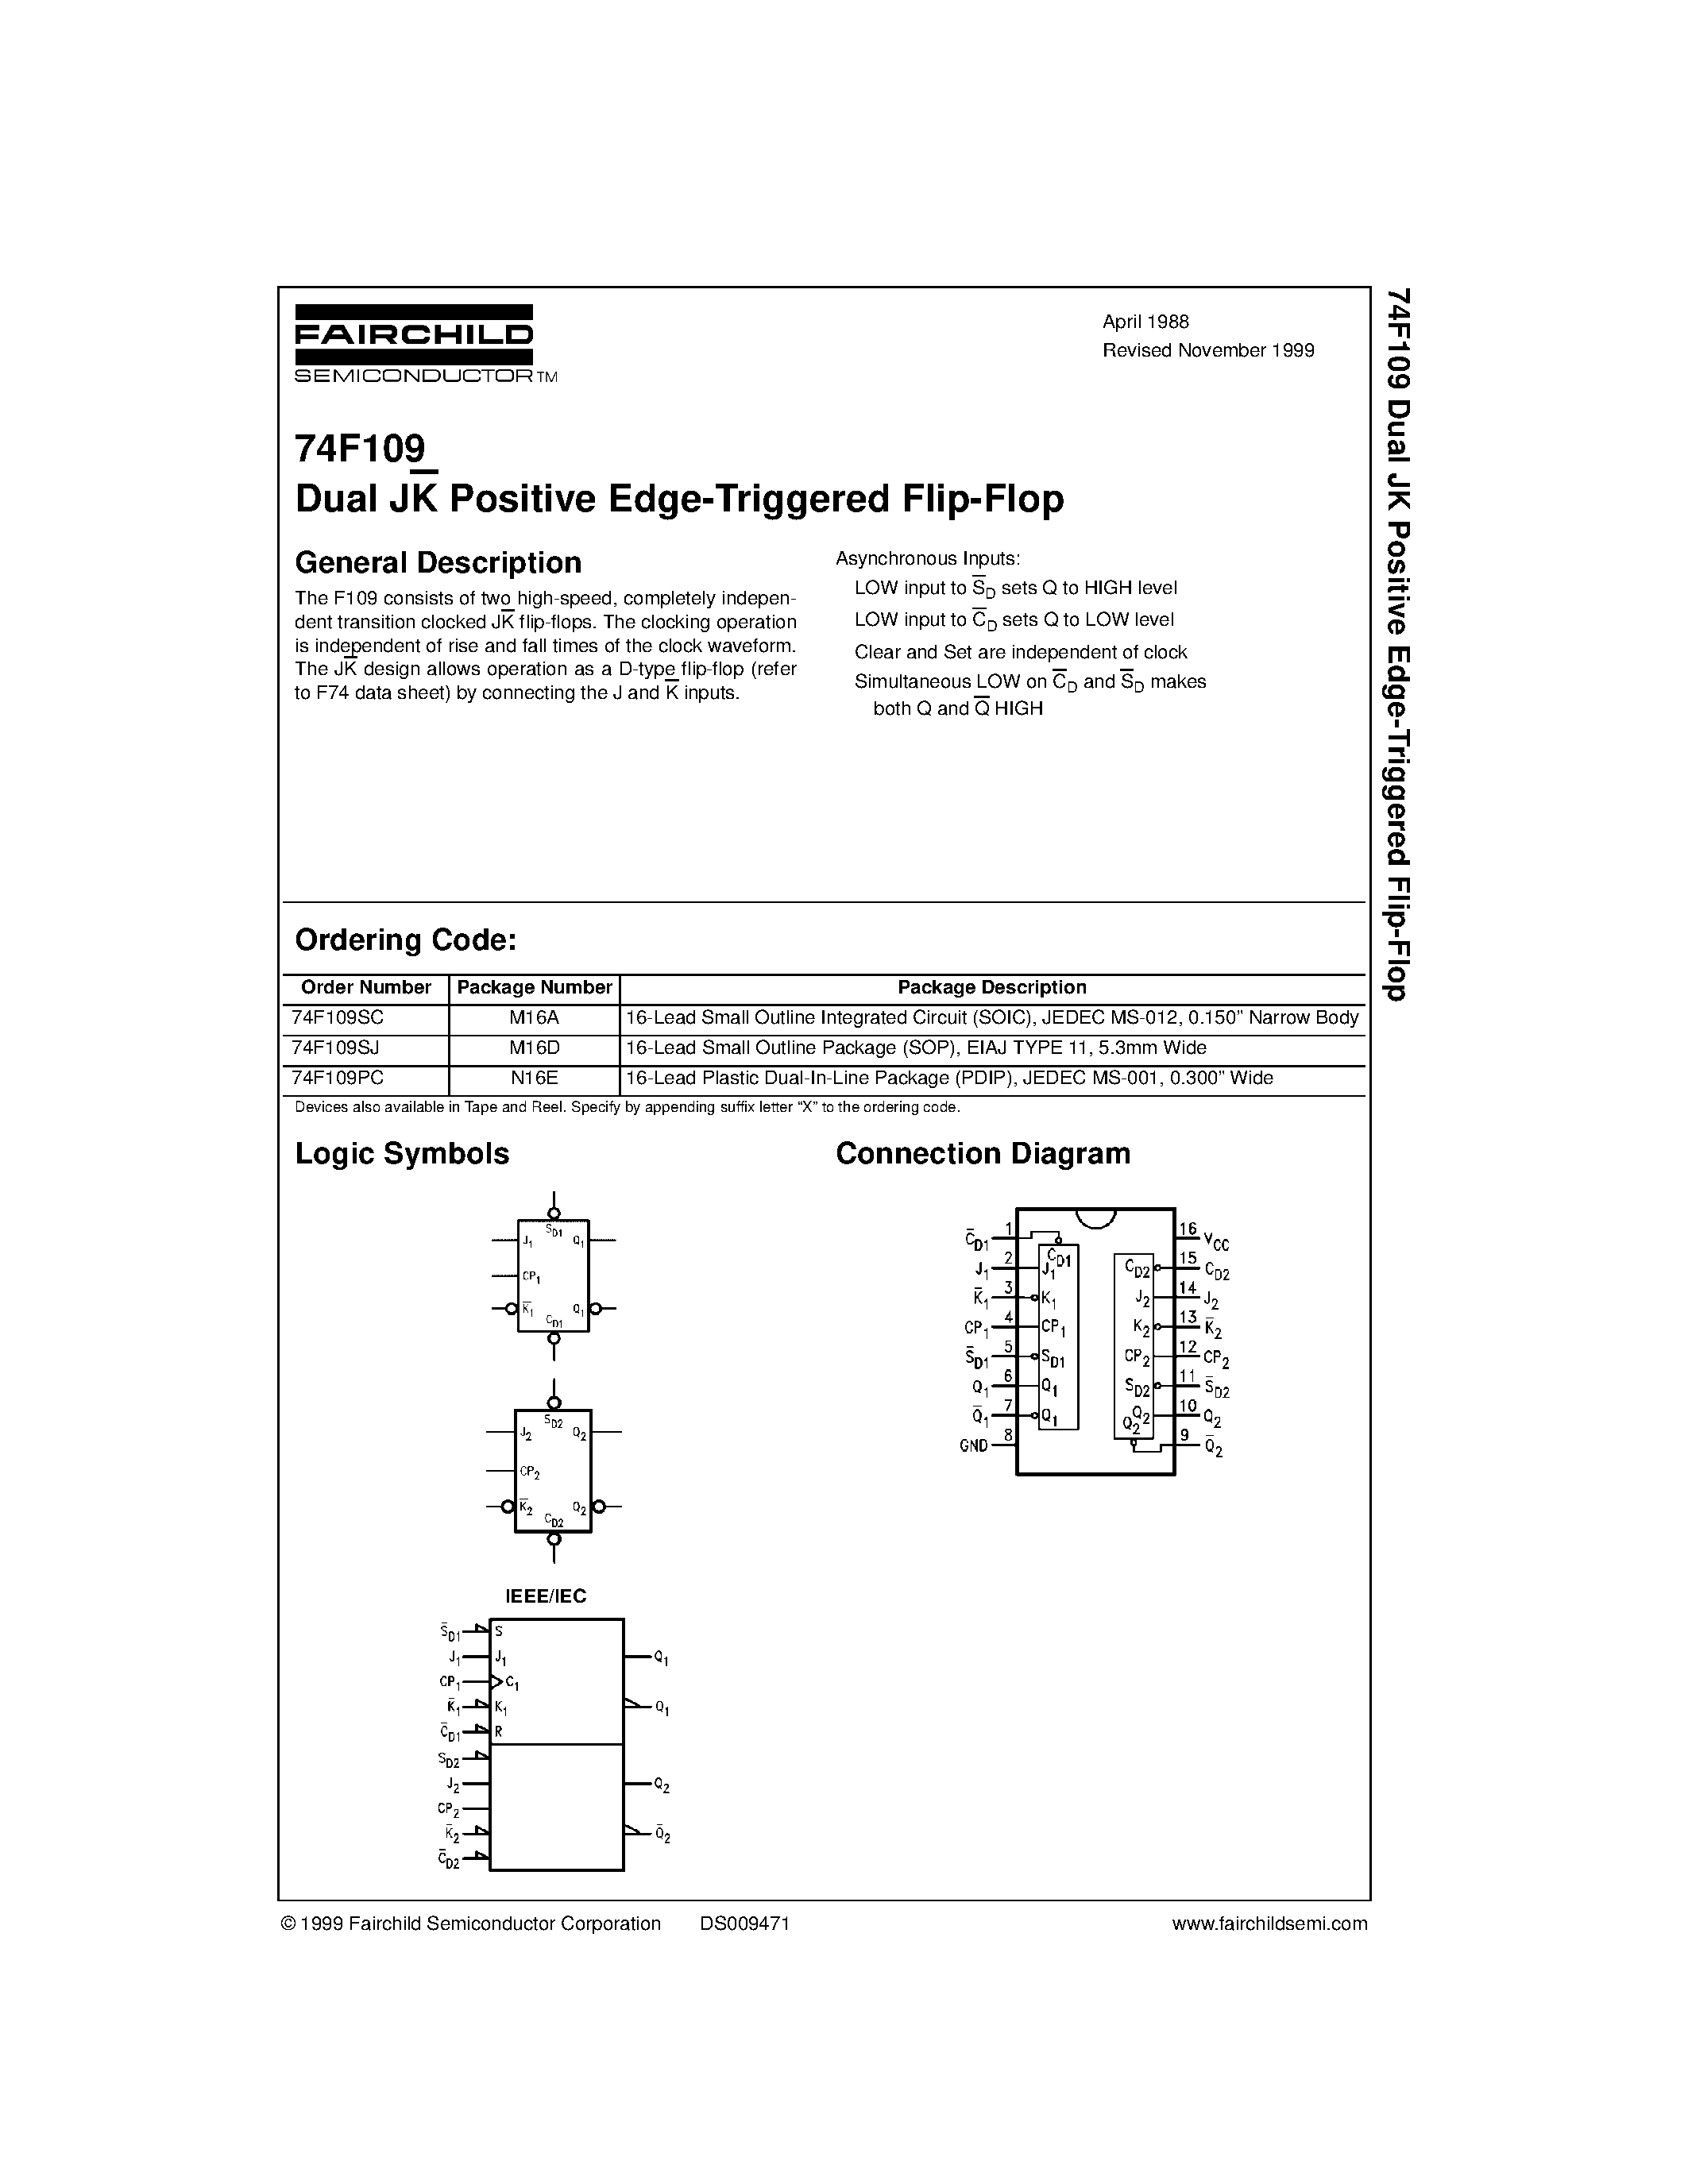 Datasheet 74F109PC - Dual JK Positive Edge-Triggered Flip-Flop page 1